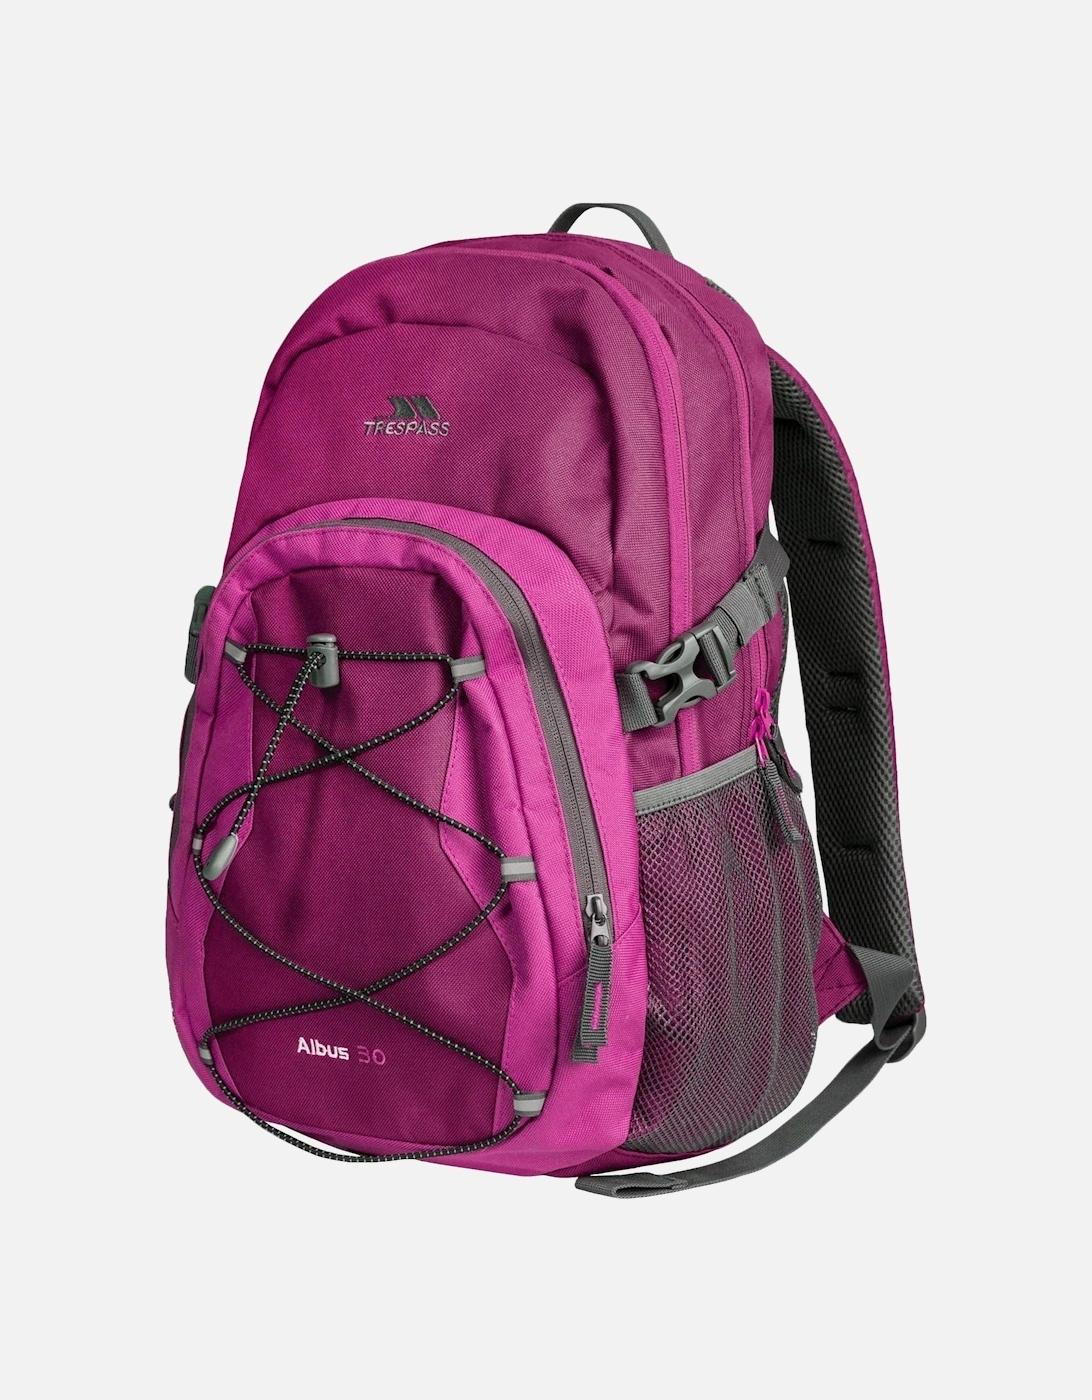 Unisex Albus Multi-Function Adventure Backpack, 56 of 55